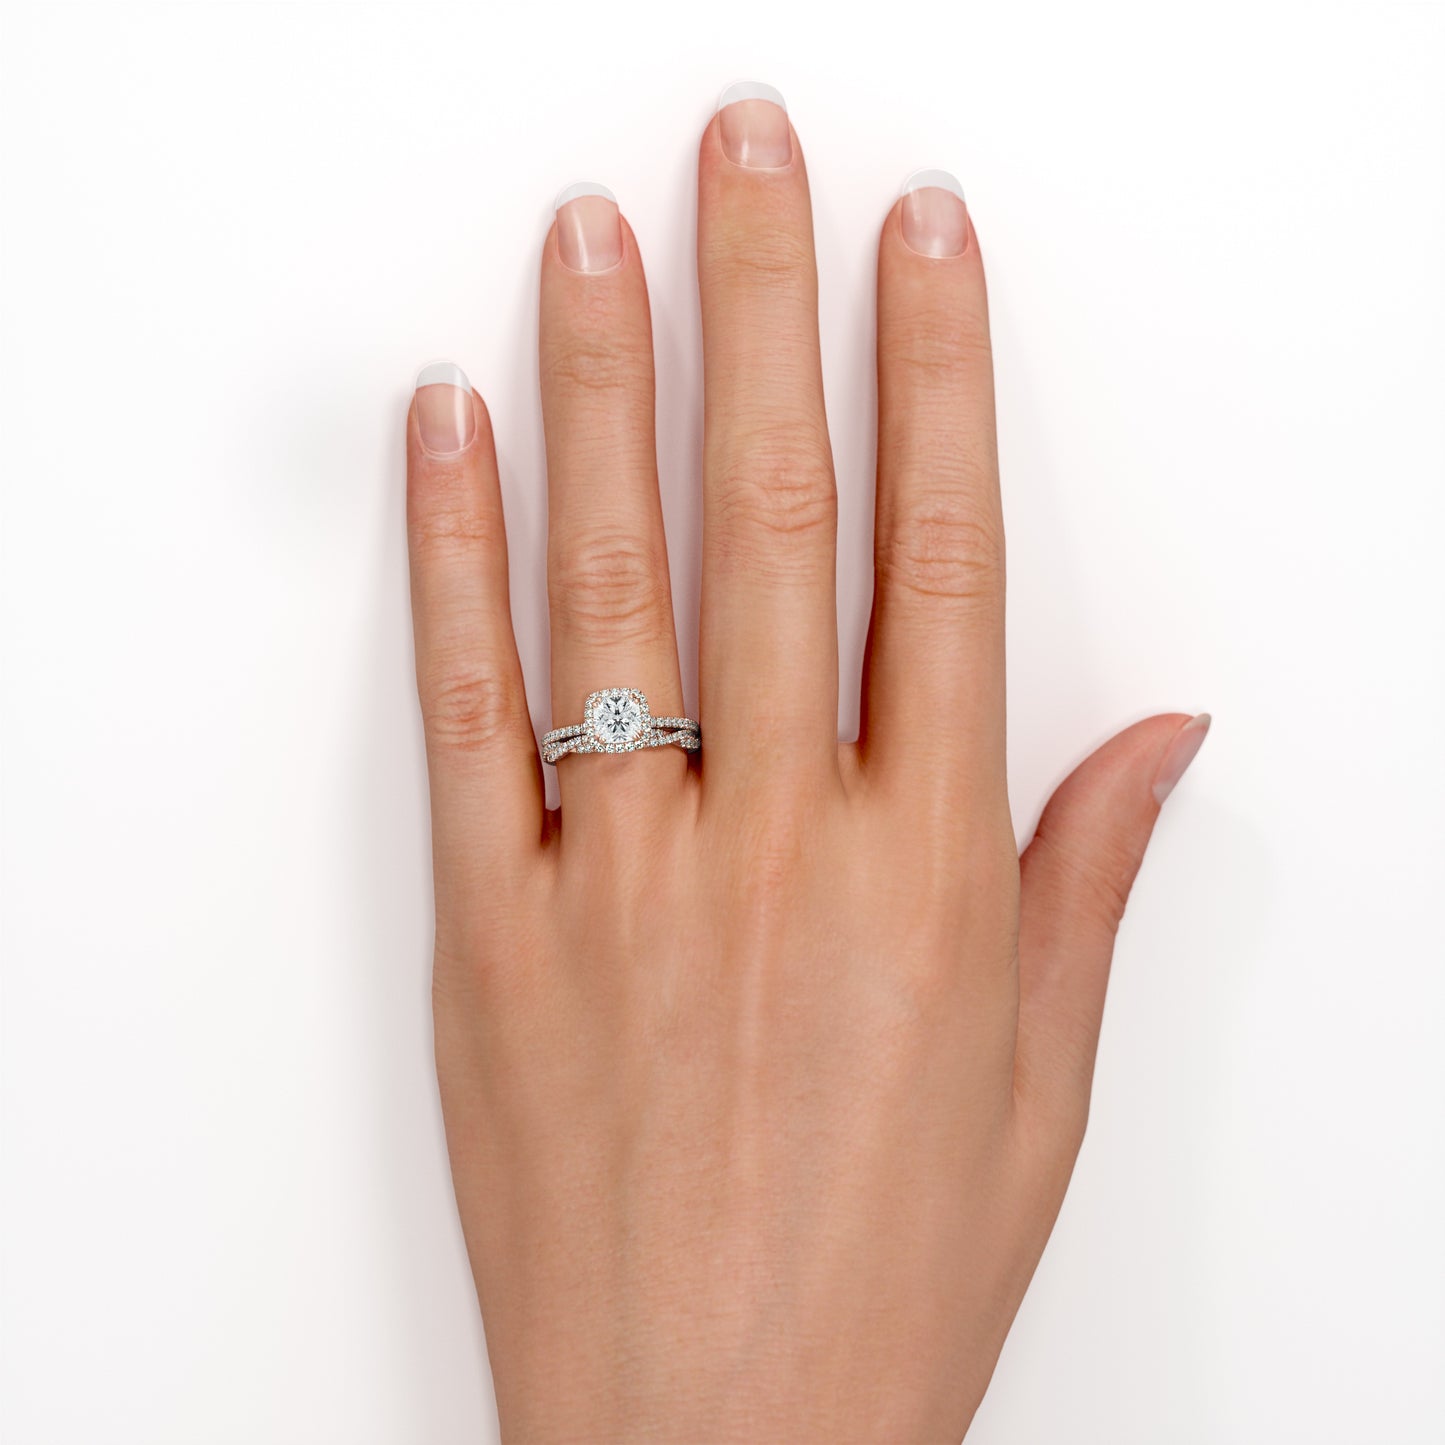 Elegant 1.65 carat Cushion cut Moissanite and diamond art deco wedding ring set for women in gold